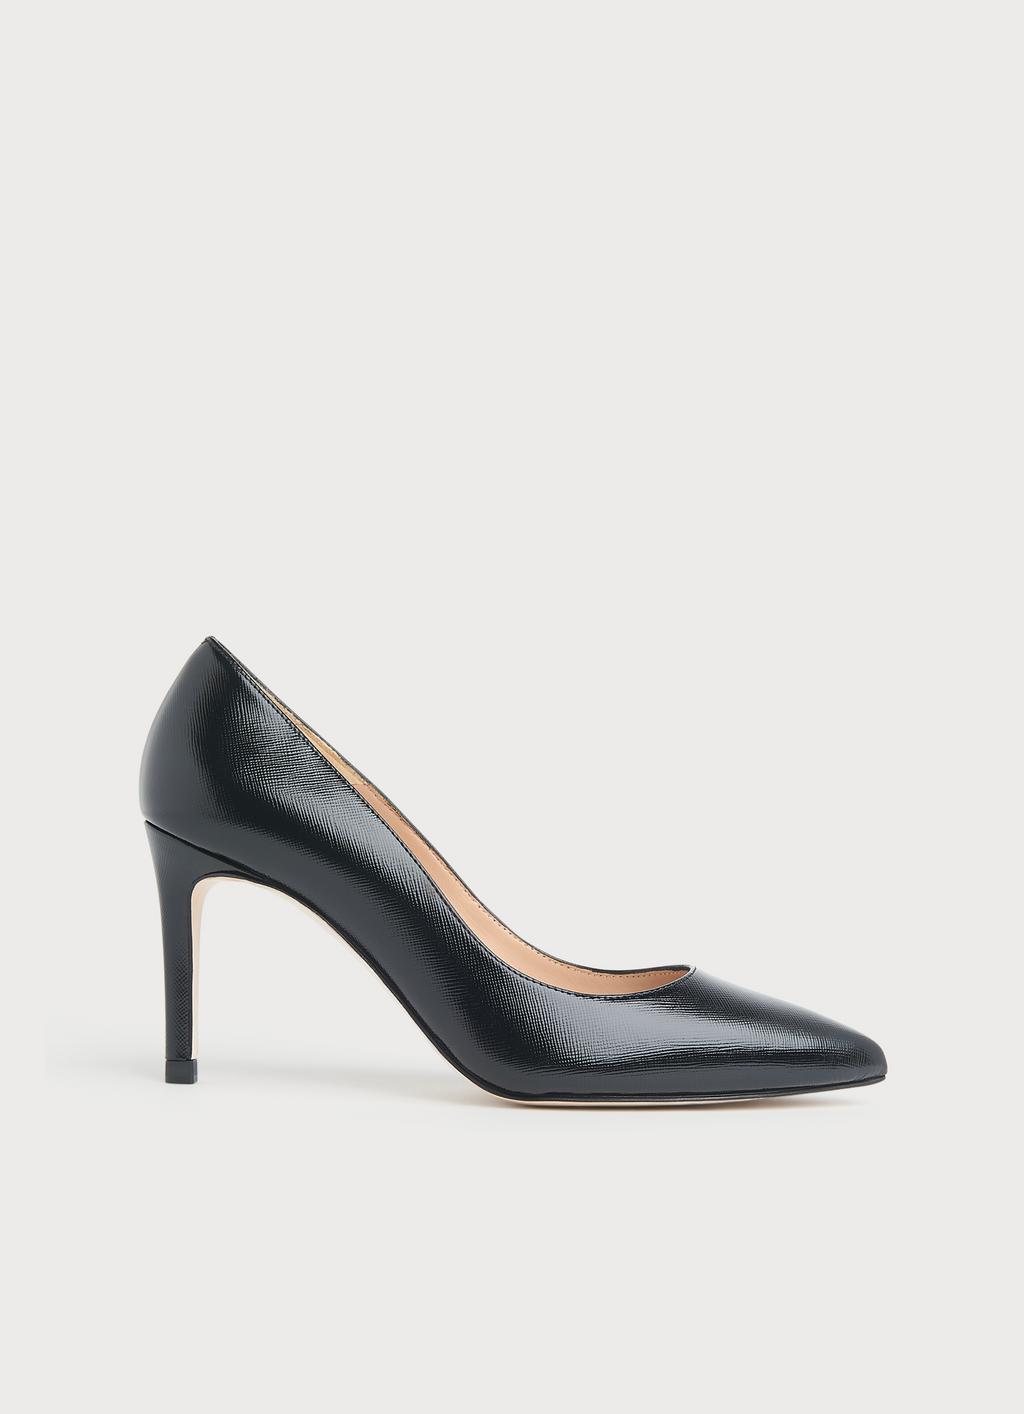 Floret Black Leather Pointed Toe Courts | Shoes | L.K.Bennett